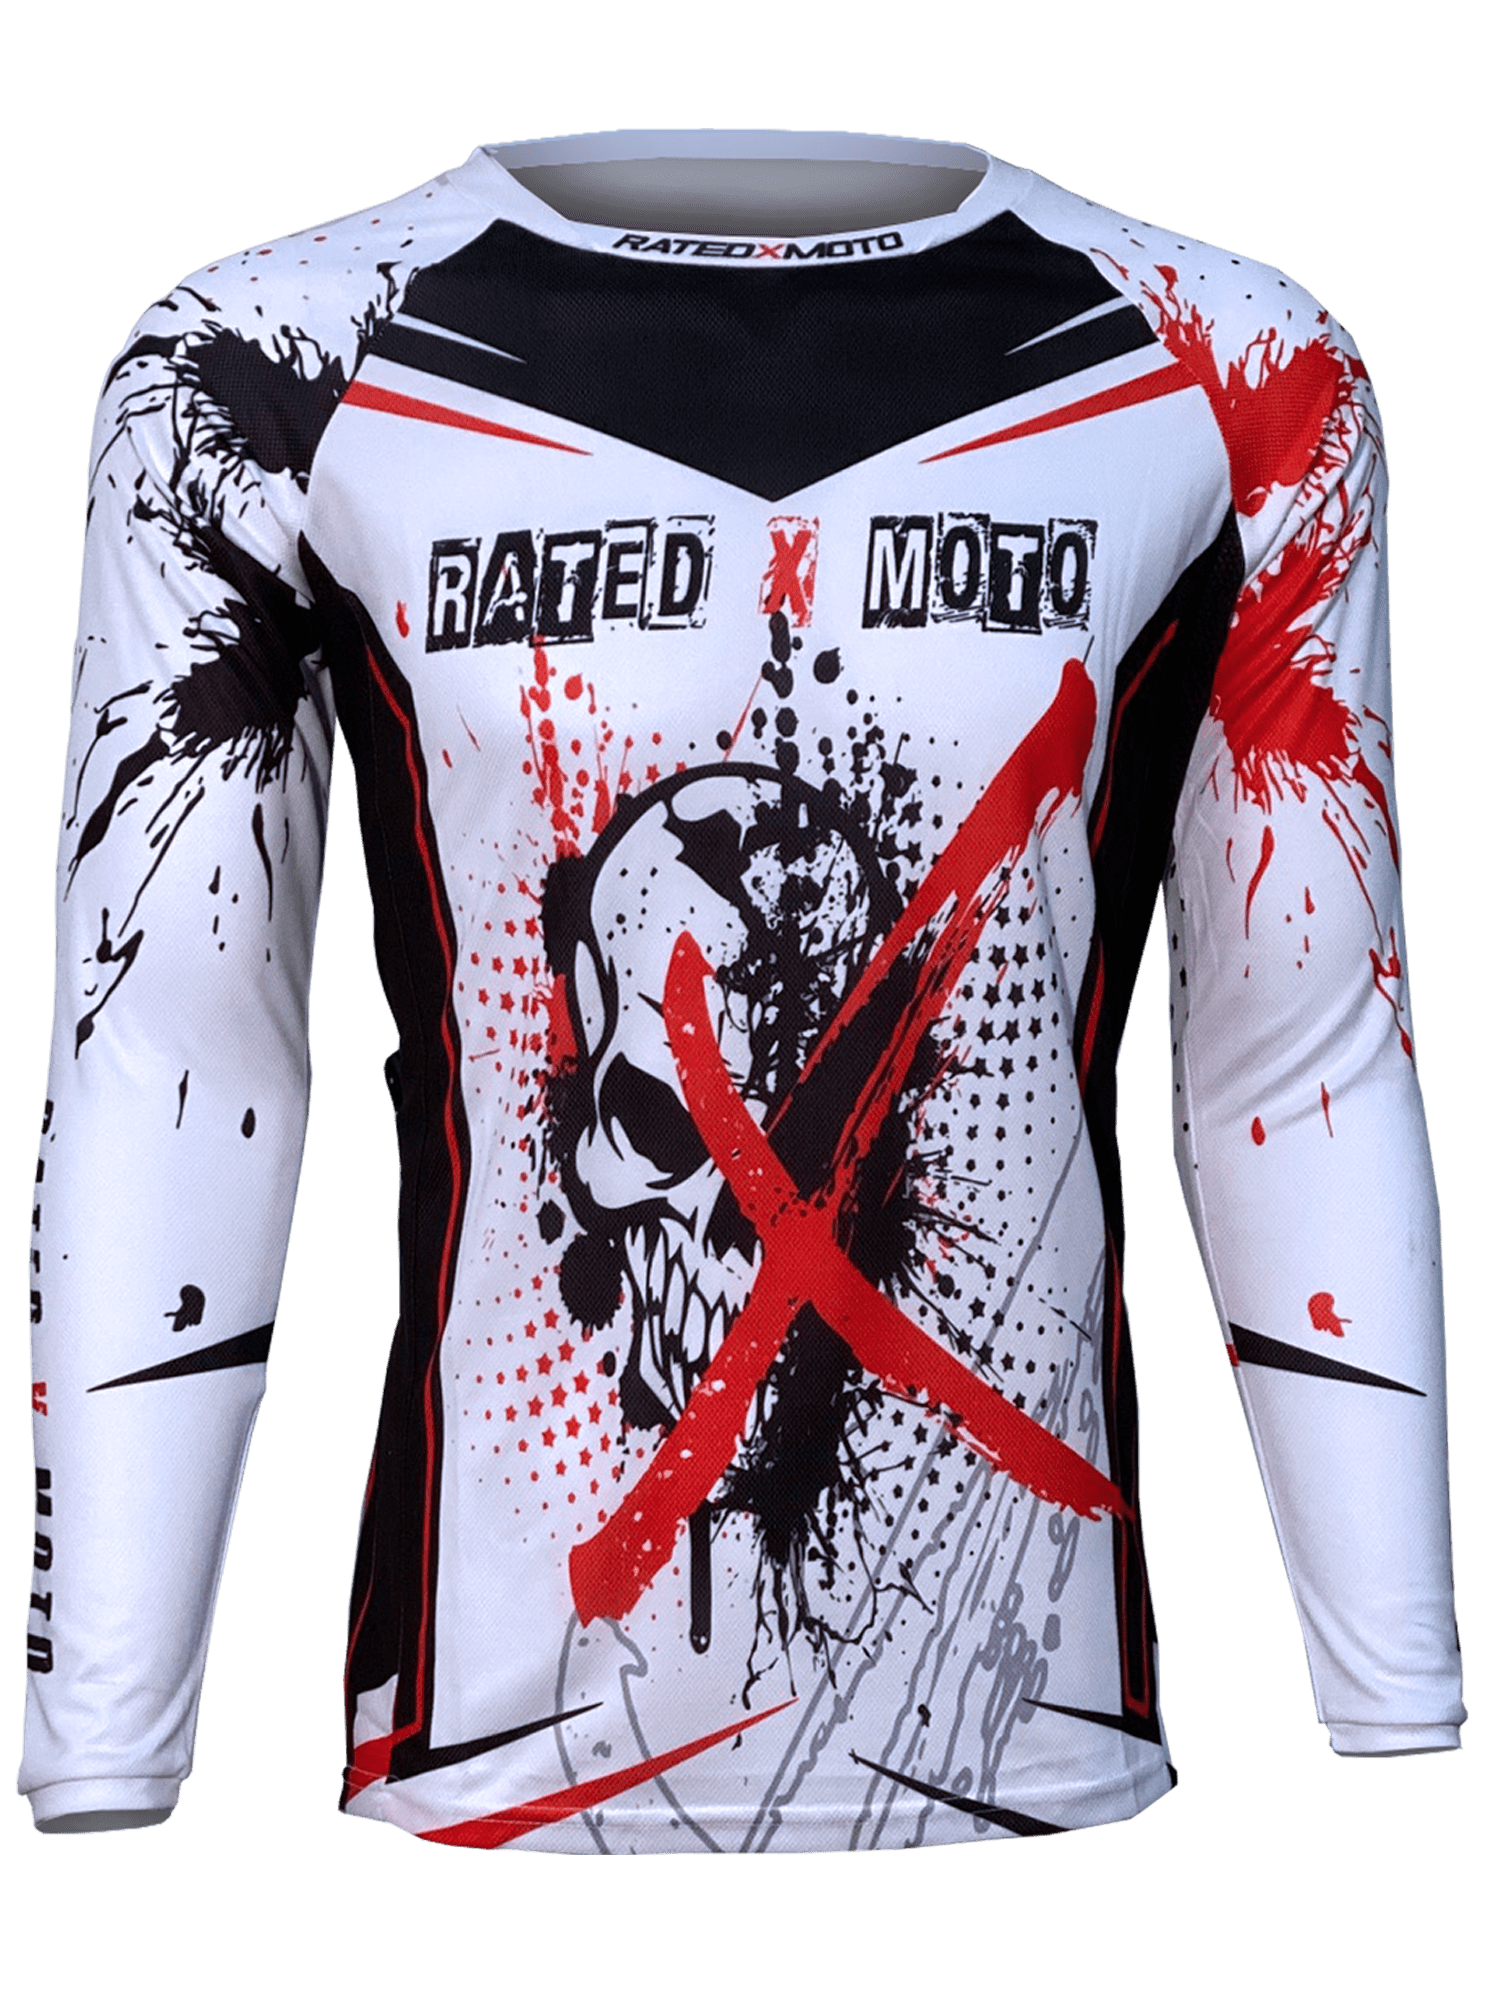 Rated X Moto Xtreme Skull Men's Jersey Motocross Red/White MX Dirt Bike X-Pro Series ATV 